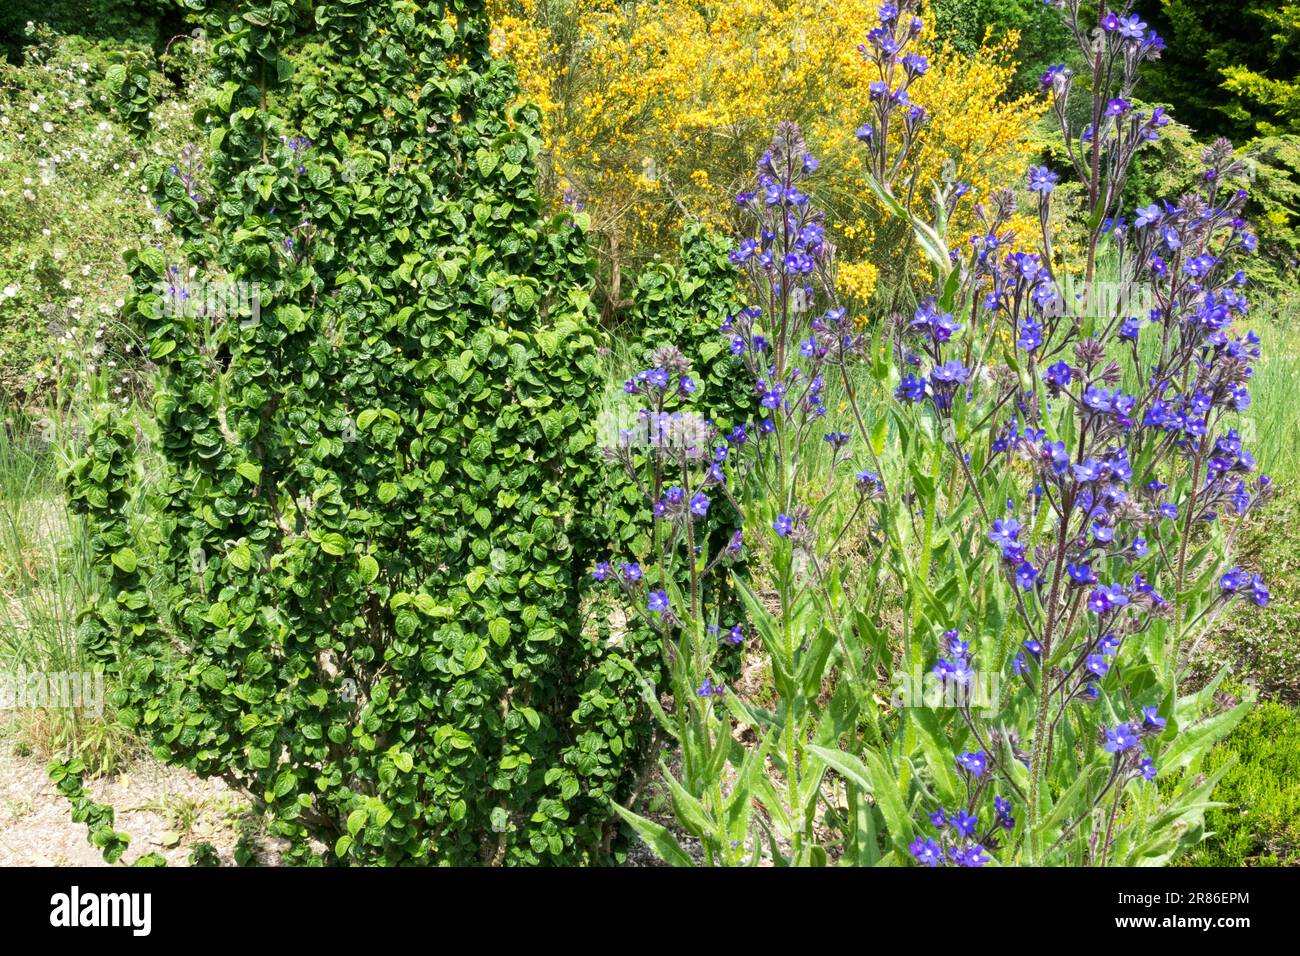 Anchusa azurea 'Dropmore', Cornus sanguinea 'Compressa', Garden scene in June Stock Photo